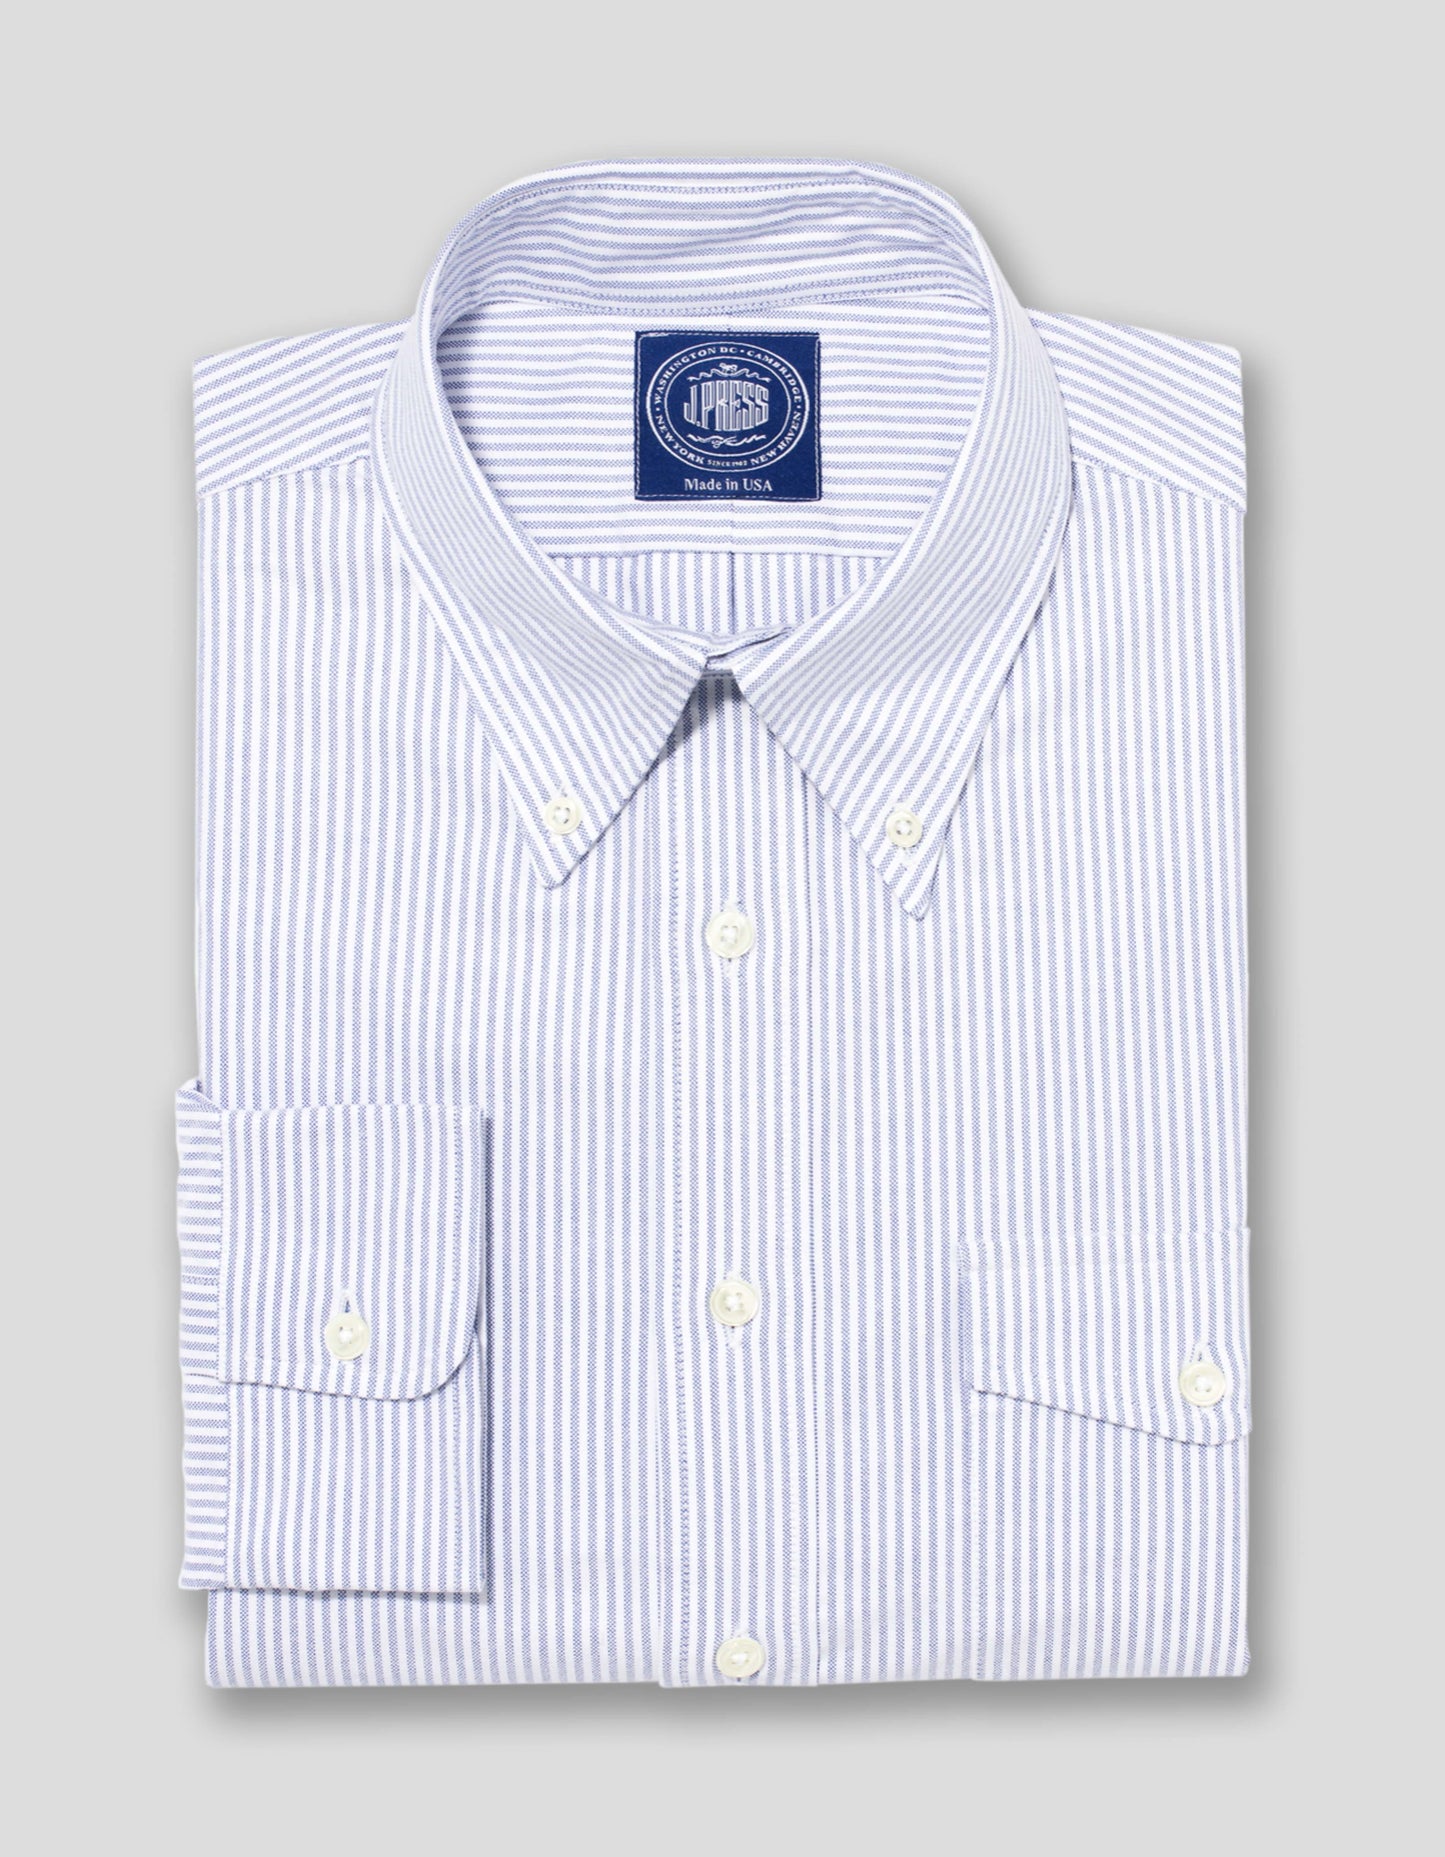 BLUE/WHITE OXFORD DRESS SHIRT WITH FLAP POCKET - TRIM FIT